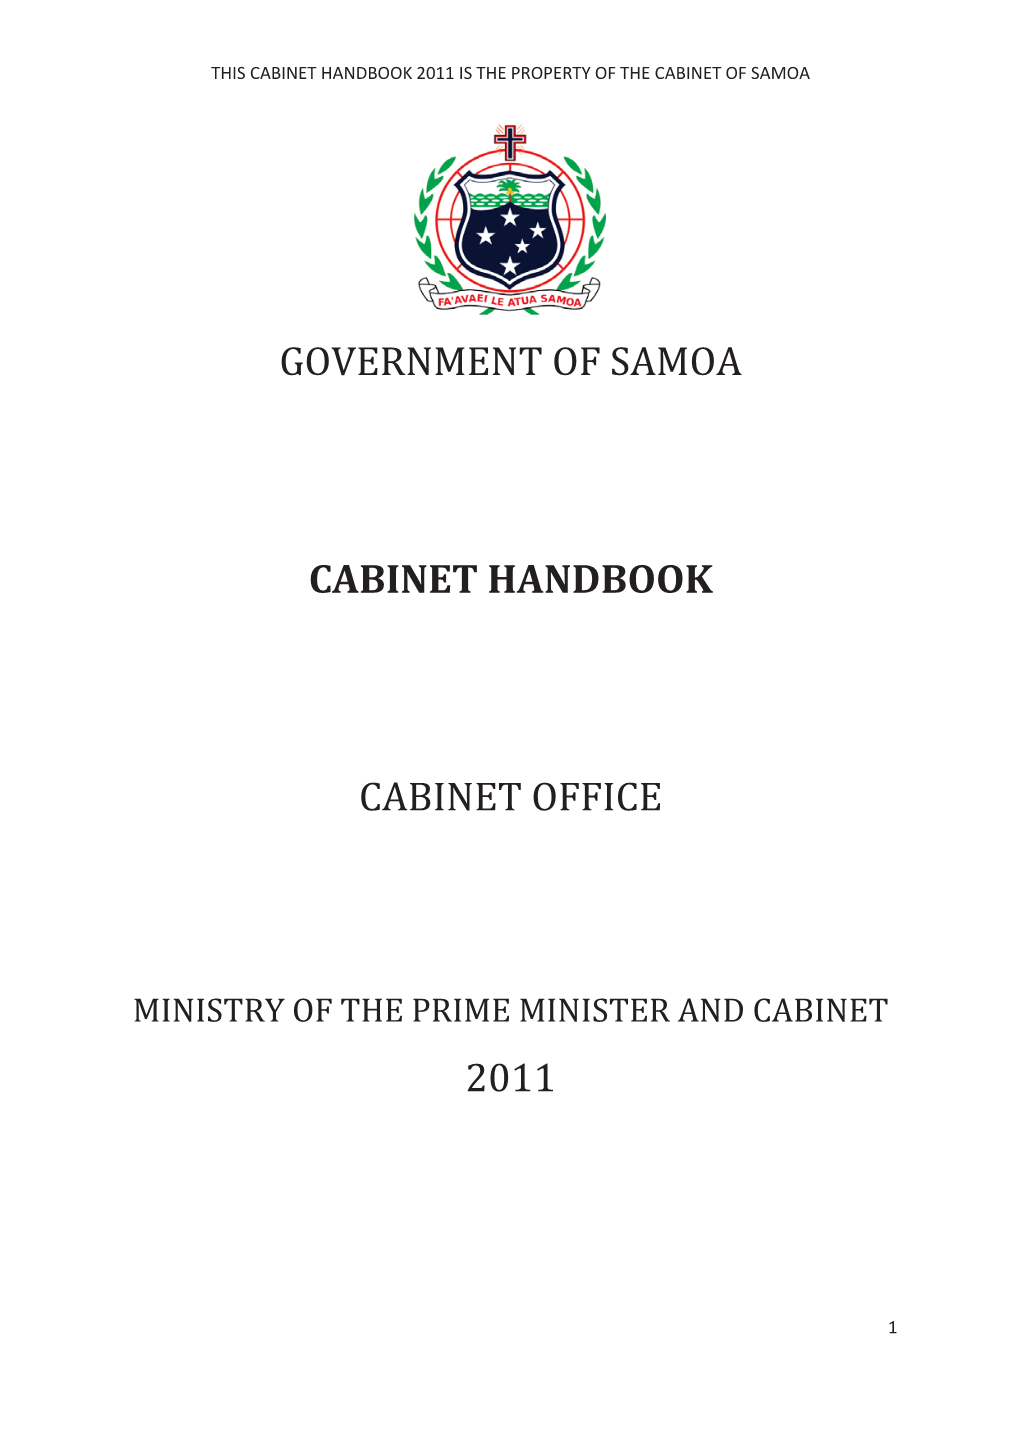 Government of Samoa Cabinet Handbook Cabinet Office 2011